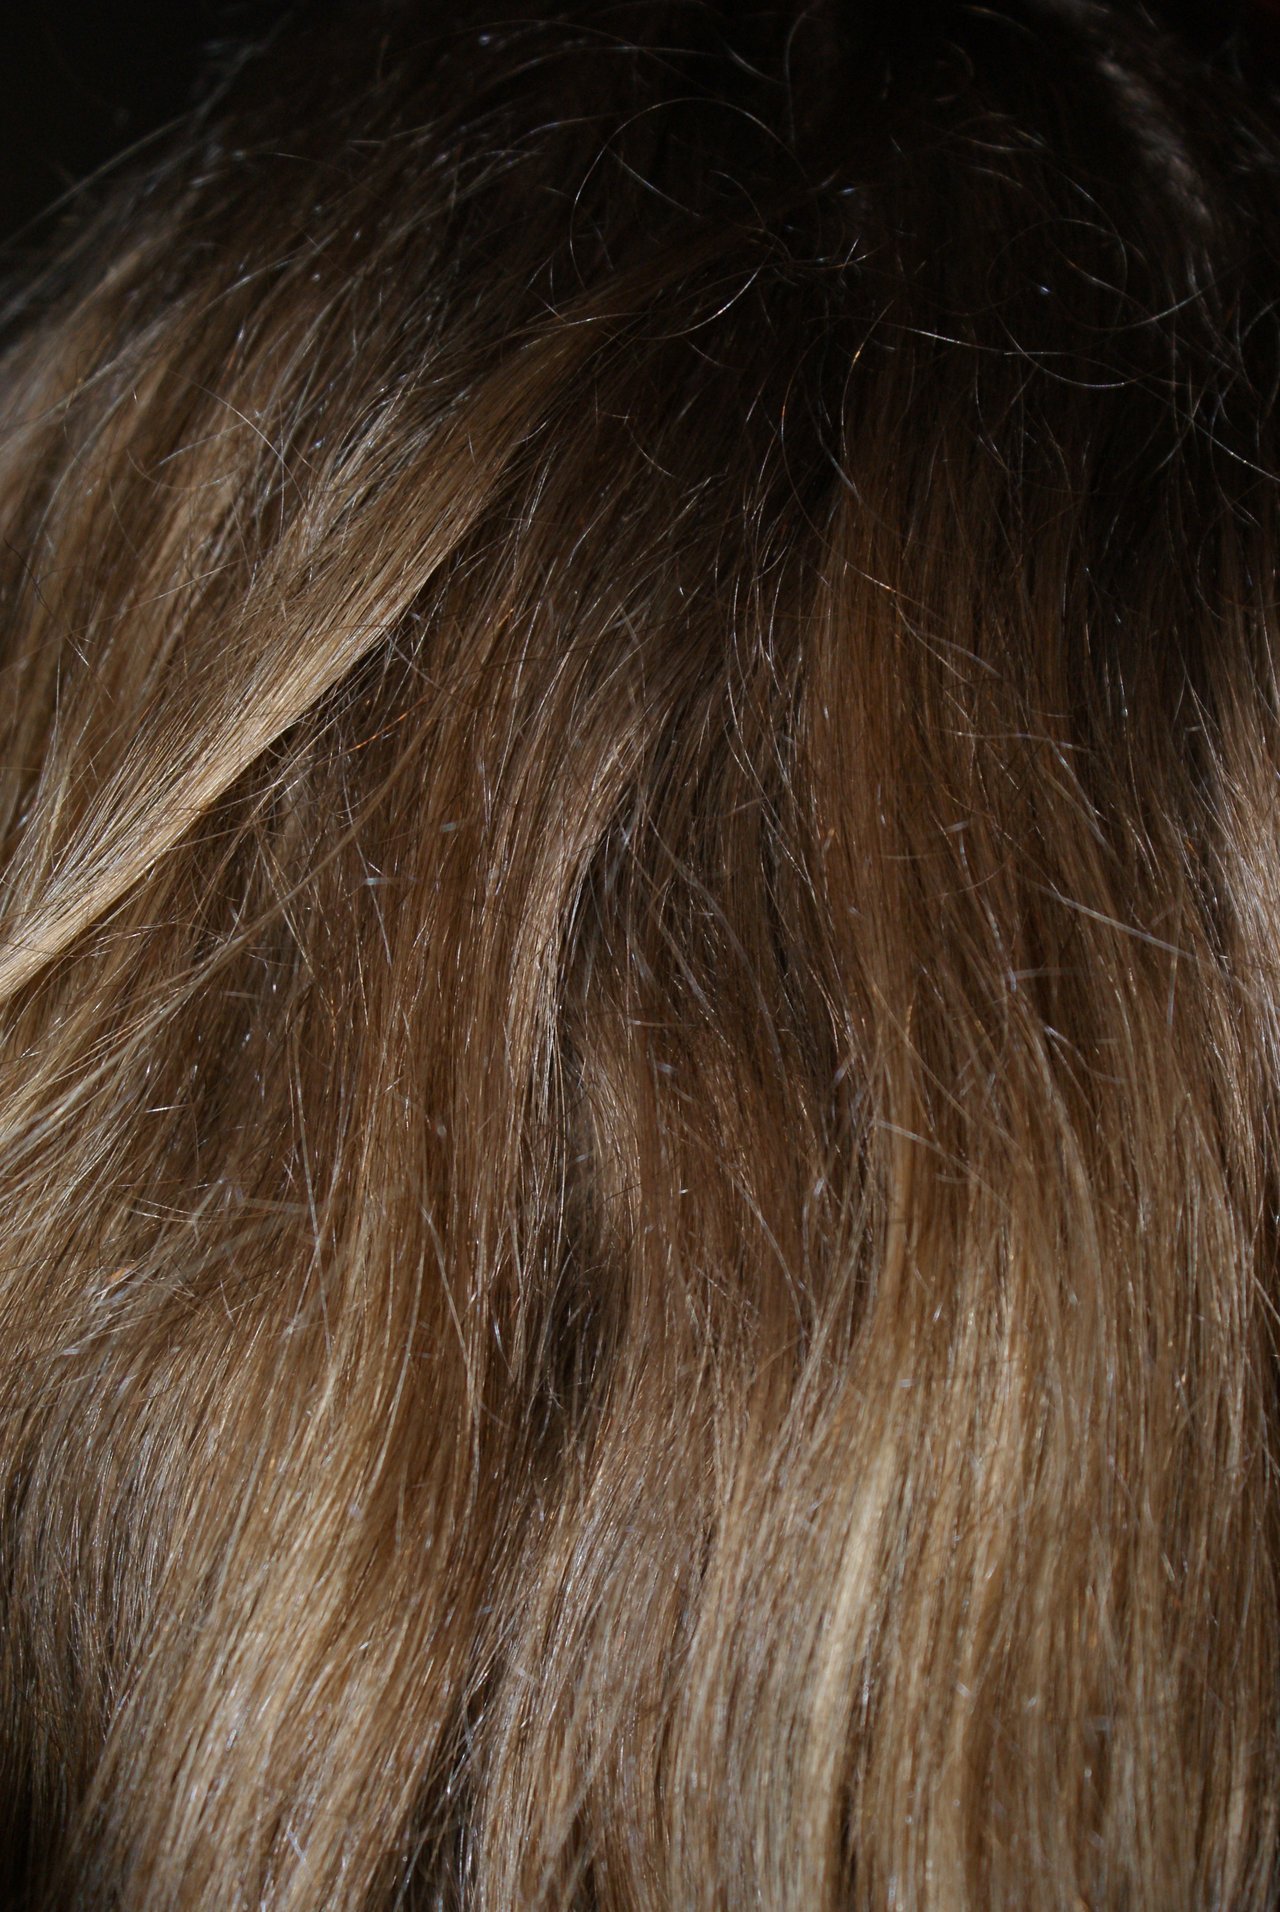 hair texture, background, brown hair texture, background